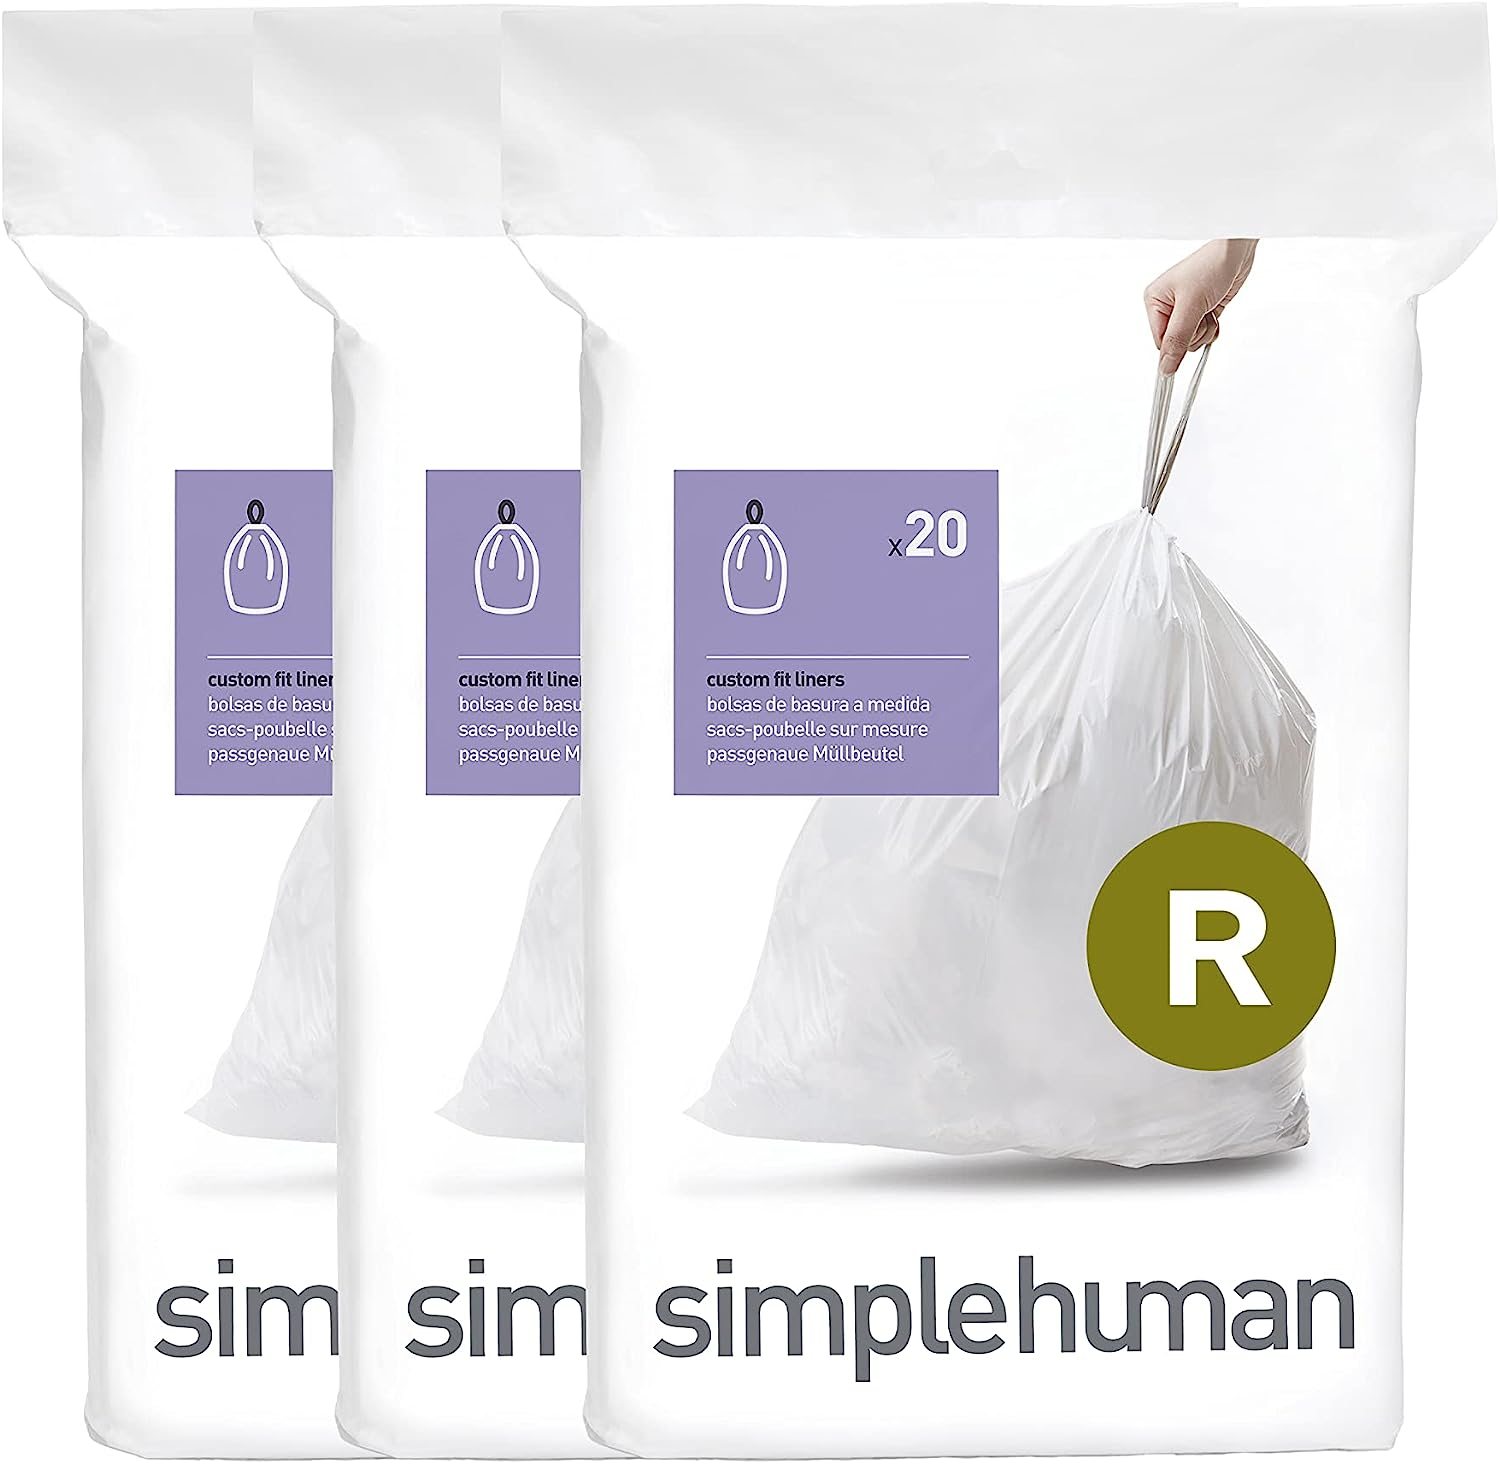 https://cdn.bestreviews.com/images/v4desktop/product-matrix/best-trash-bags-simplehuman-code-r-custom-fit-drawstring-trash-bags-dispenser-packs-60-10-liter-2-6-gallon.jpg